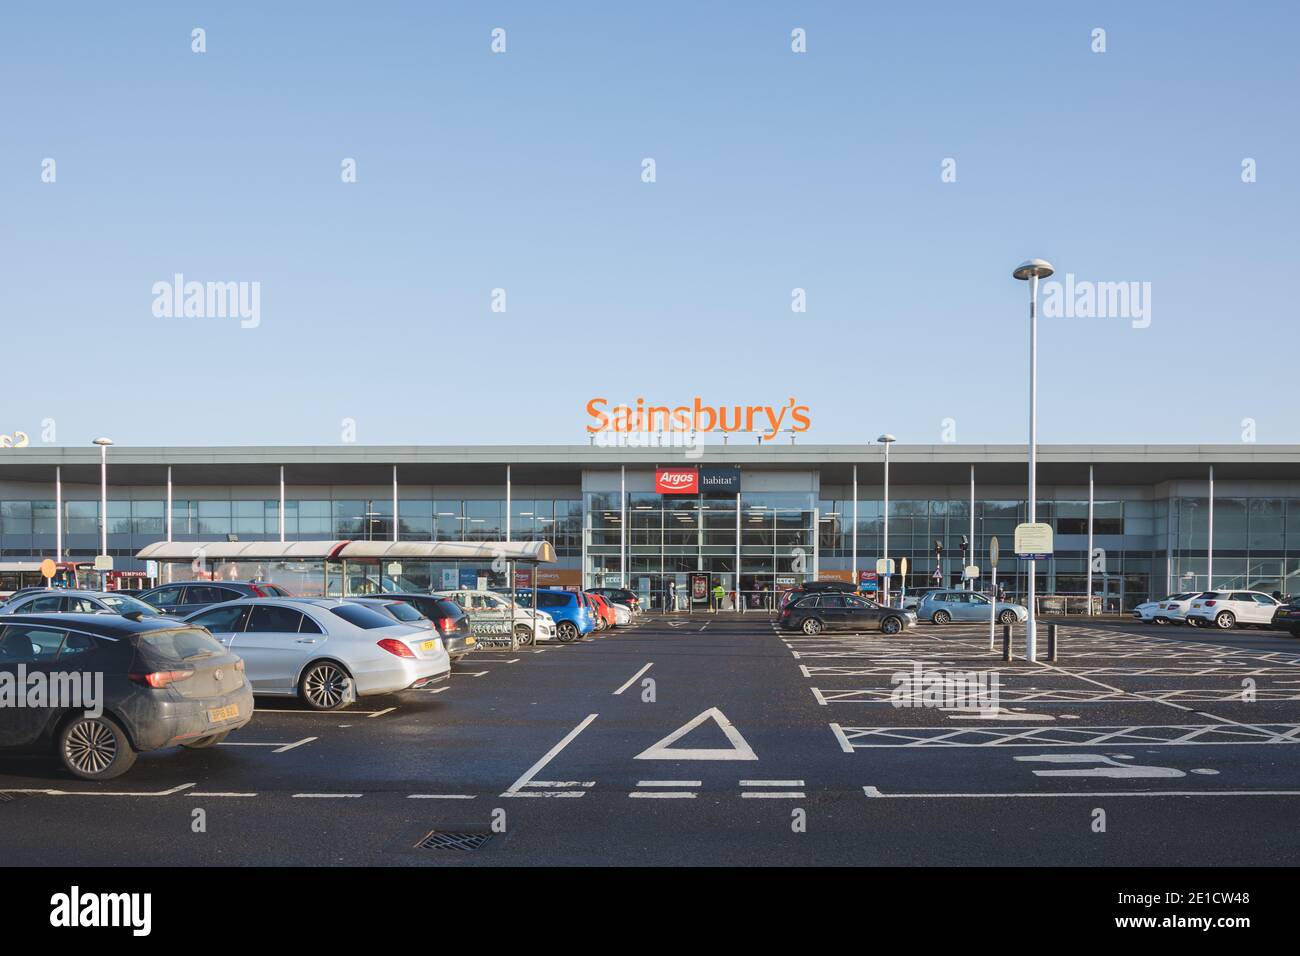 Edinburgh, Scotland - January 6 2021: The Sainbury's superstore located at Craigleith Retail Park in Edinburgh. Sainsbury's is the UK's second largest Stock Photo